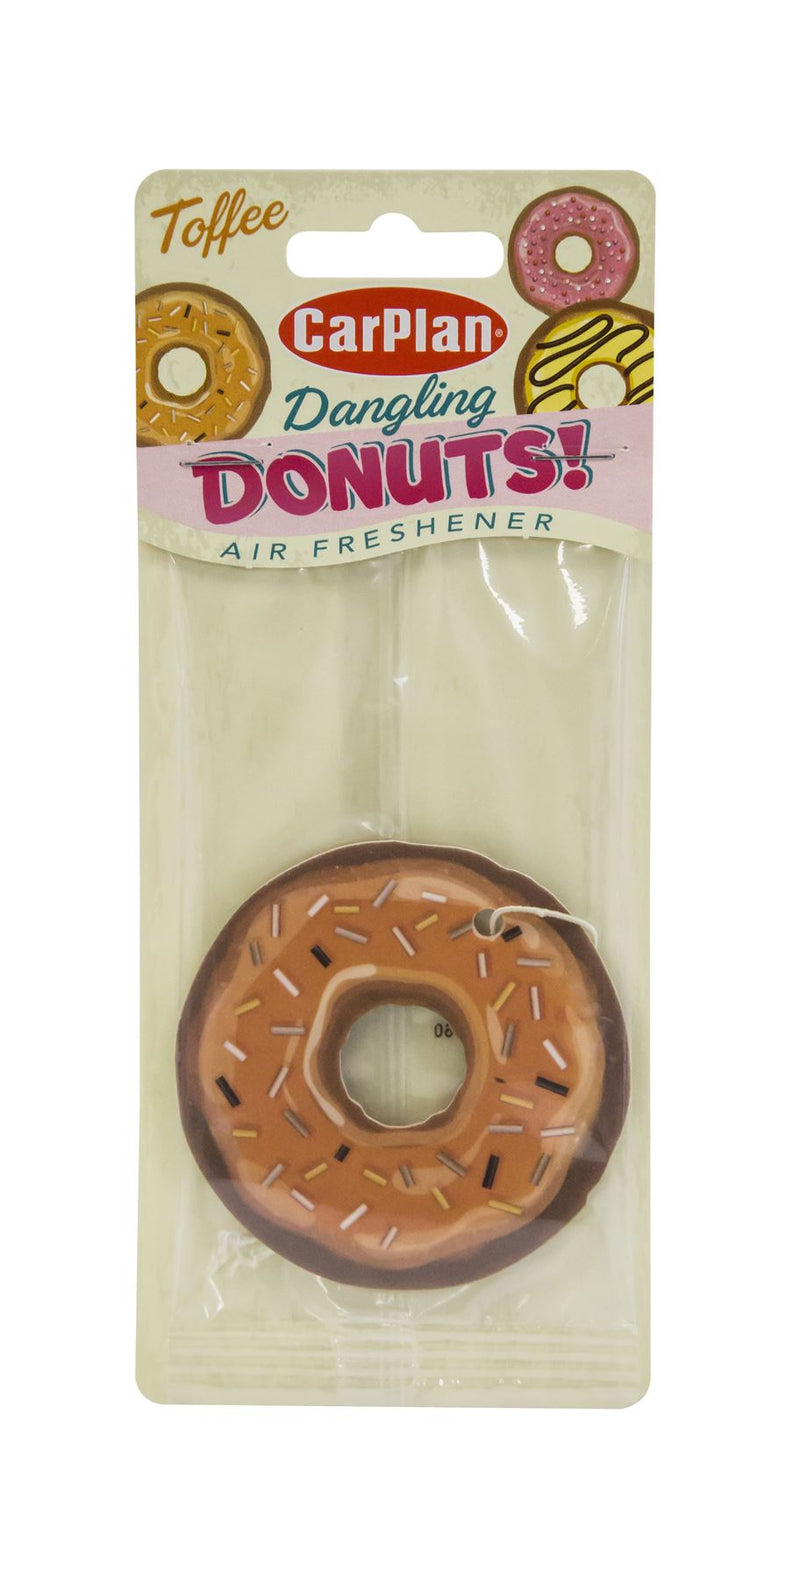 CarPlan Dangling Donuts Air Freshener - Toffee